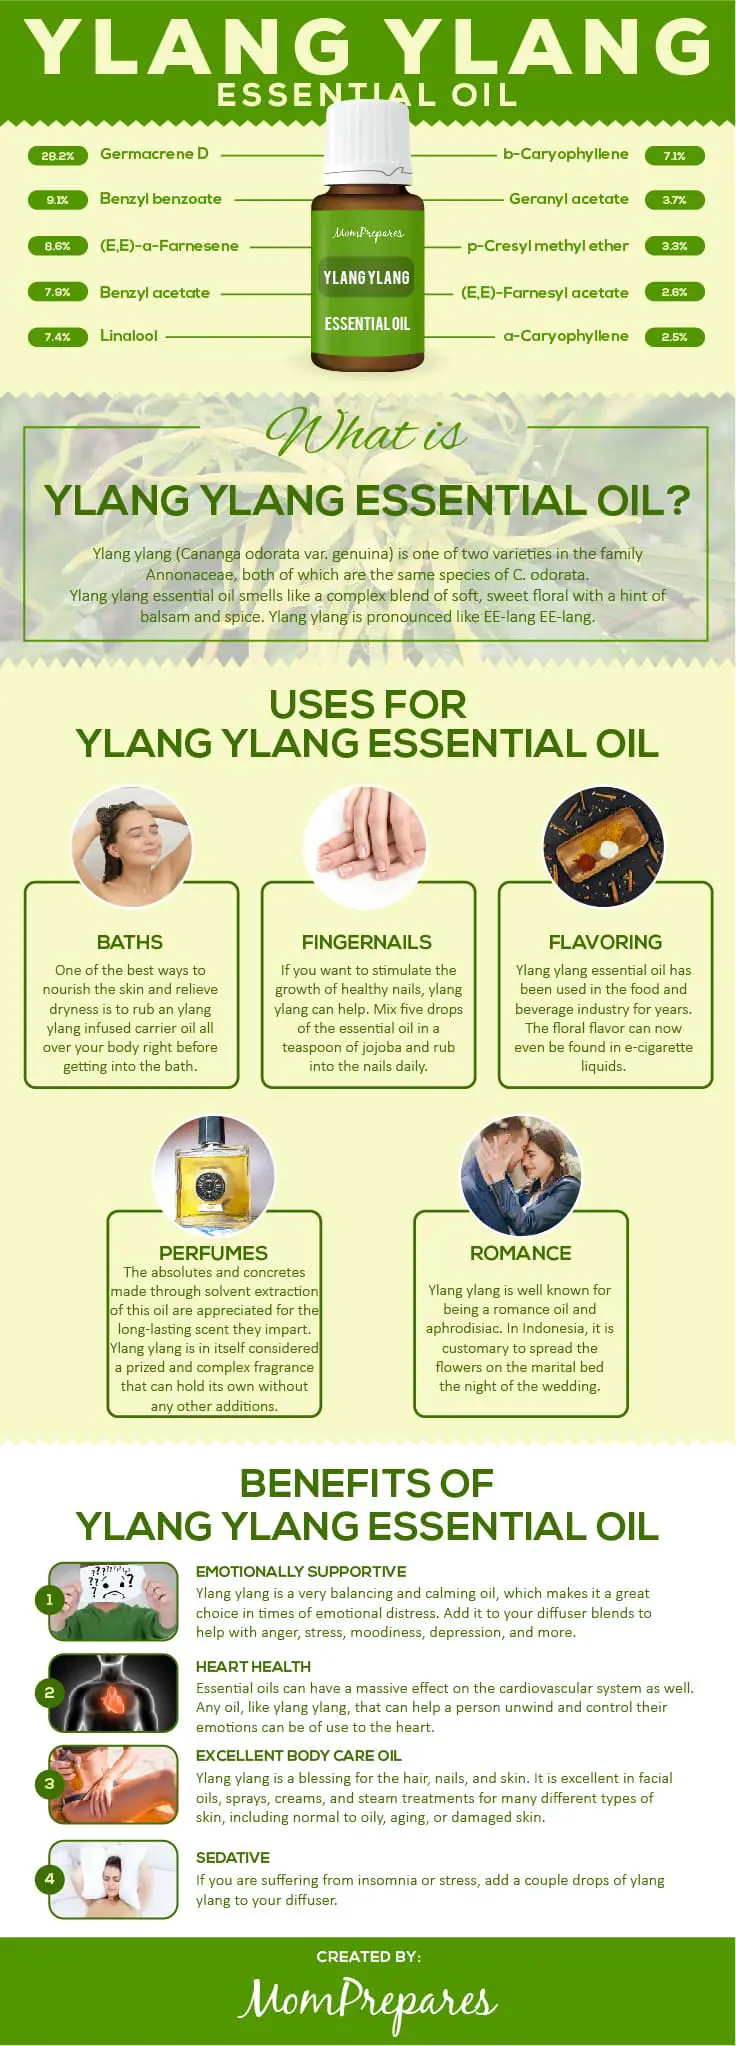 Ylang Ylang infographic